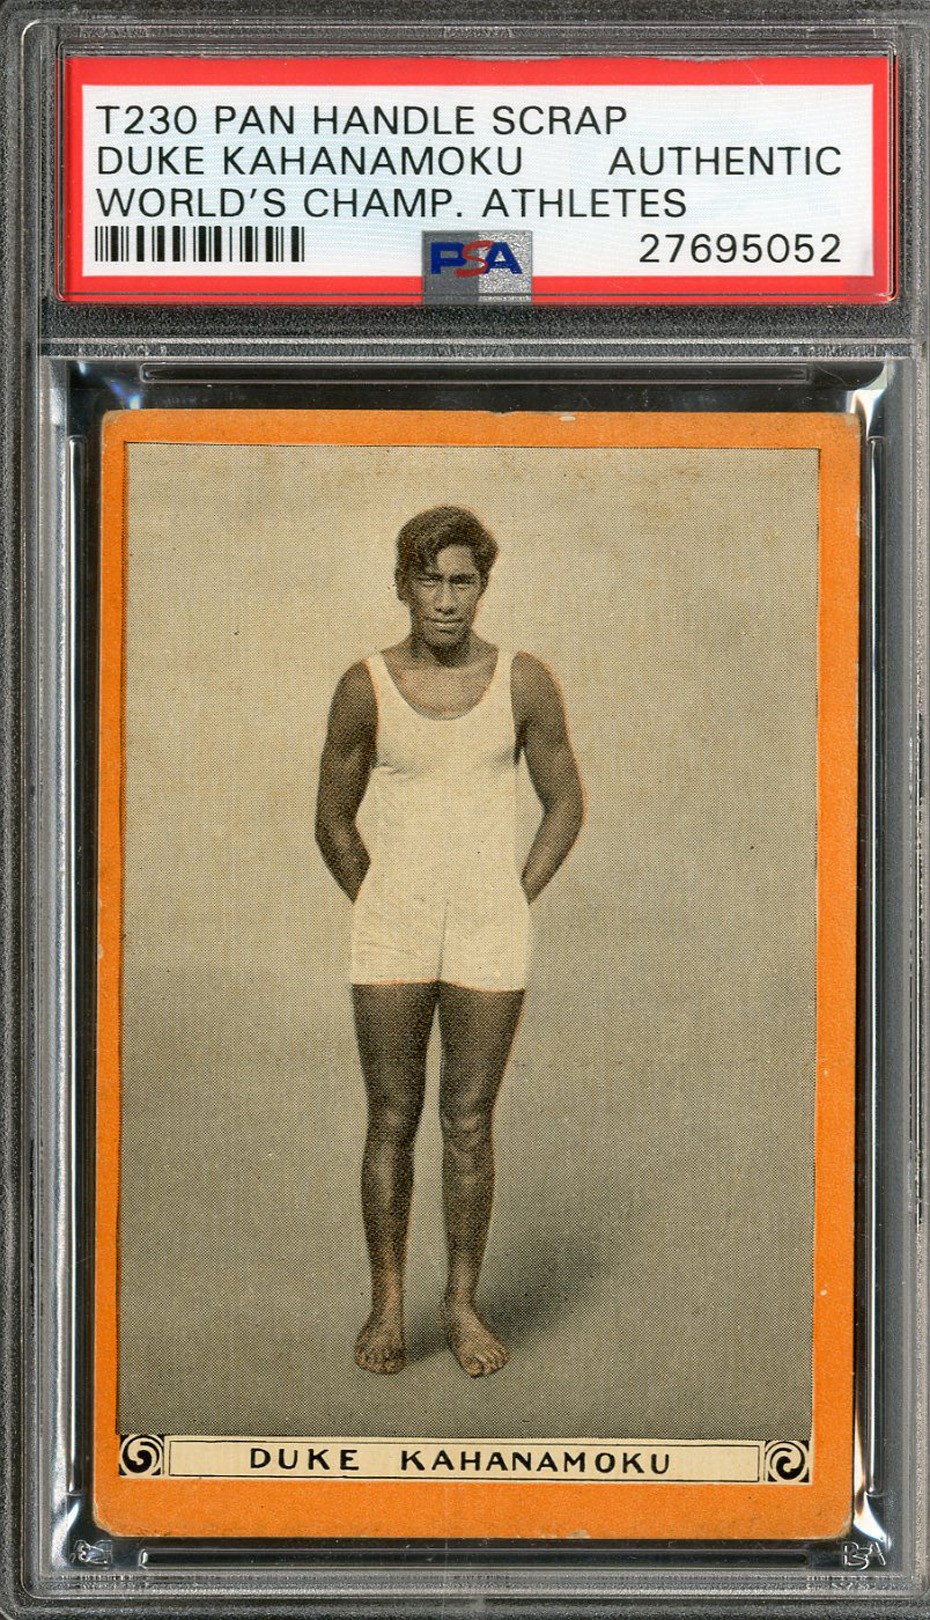 Baseball and Trading Cards - 1913 T230 Pan Handle Scrap - Duke Kahanamoku Rookie Card - PSA AUTHENTIC